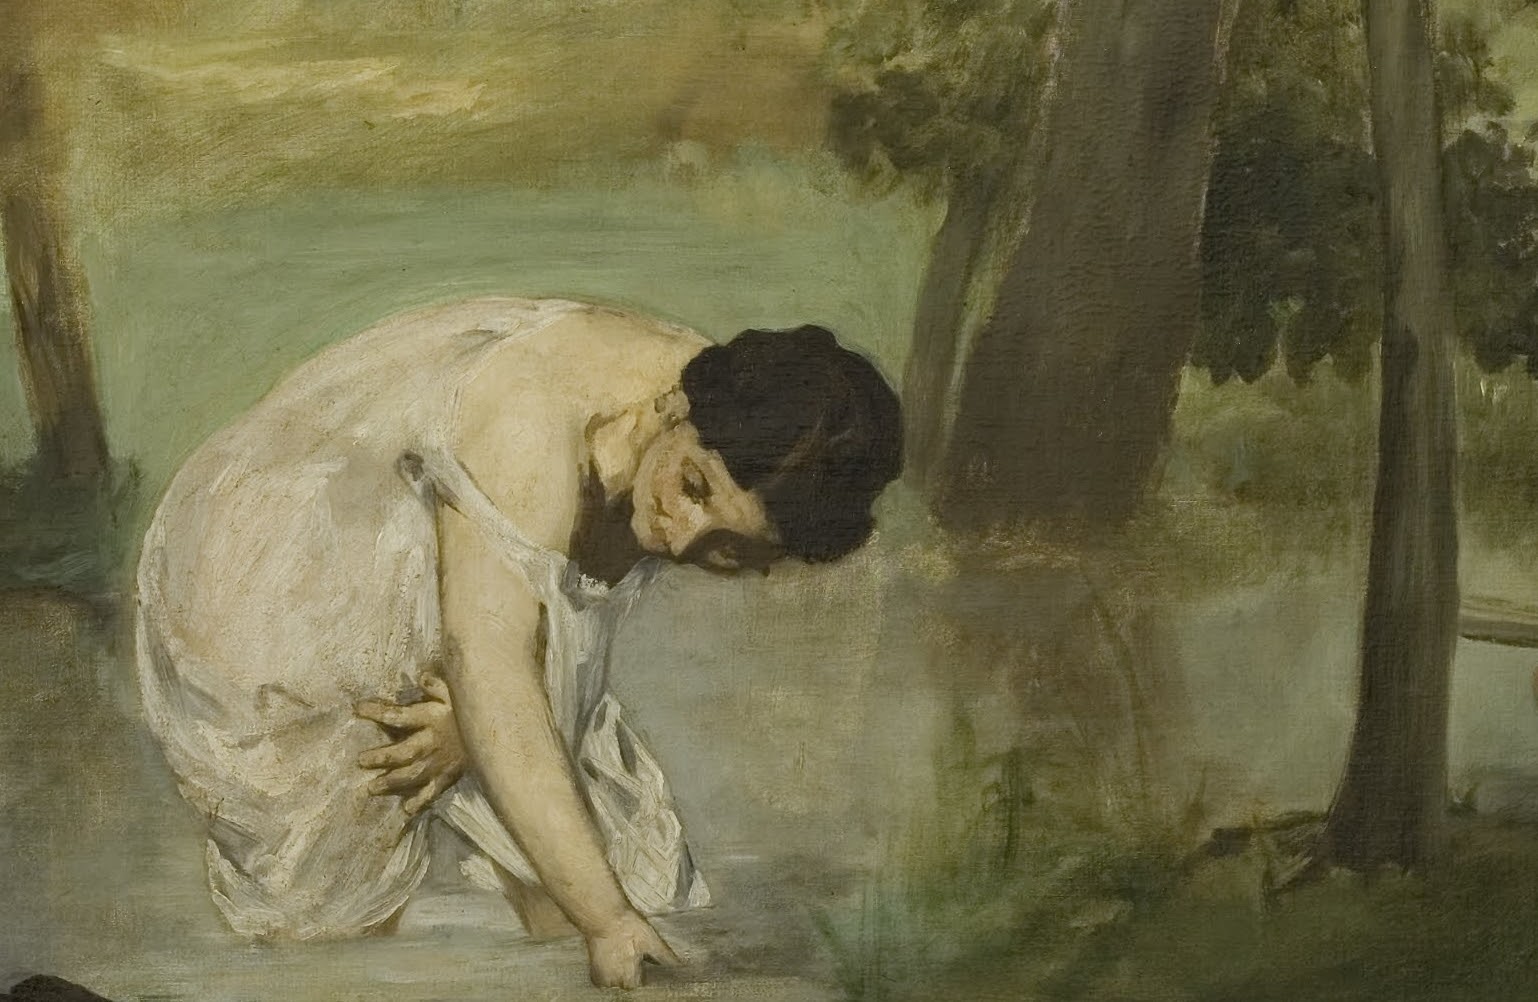 Edouard+Manet-1832-1883 (169).jpg